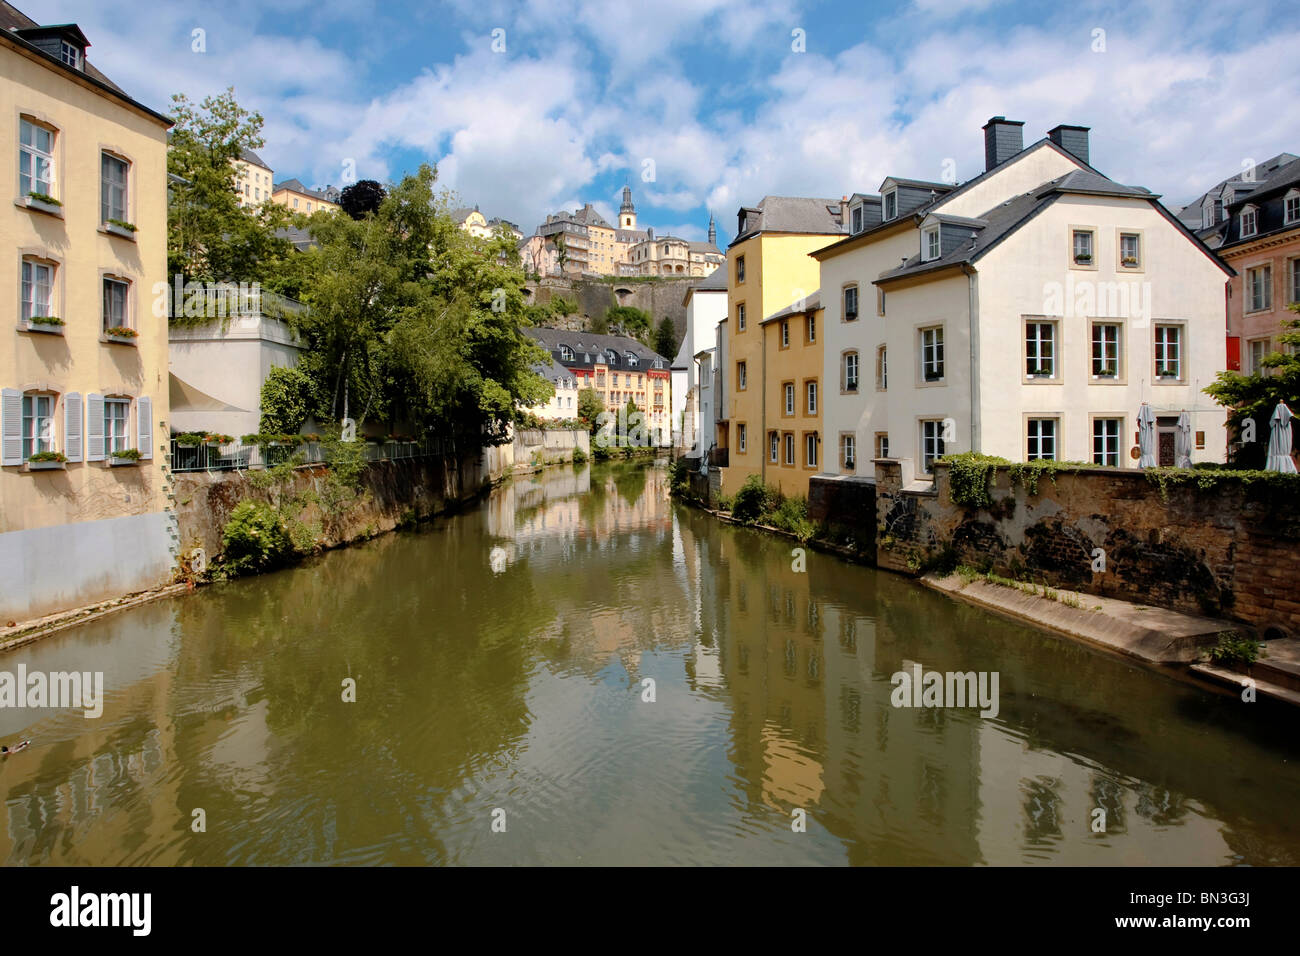 River Alzette, Grund, Luxemburg, Europe Stock Photo - Alamy